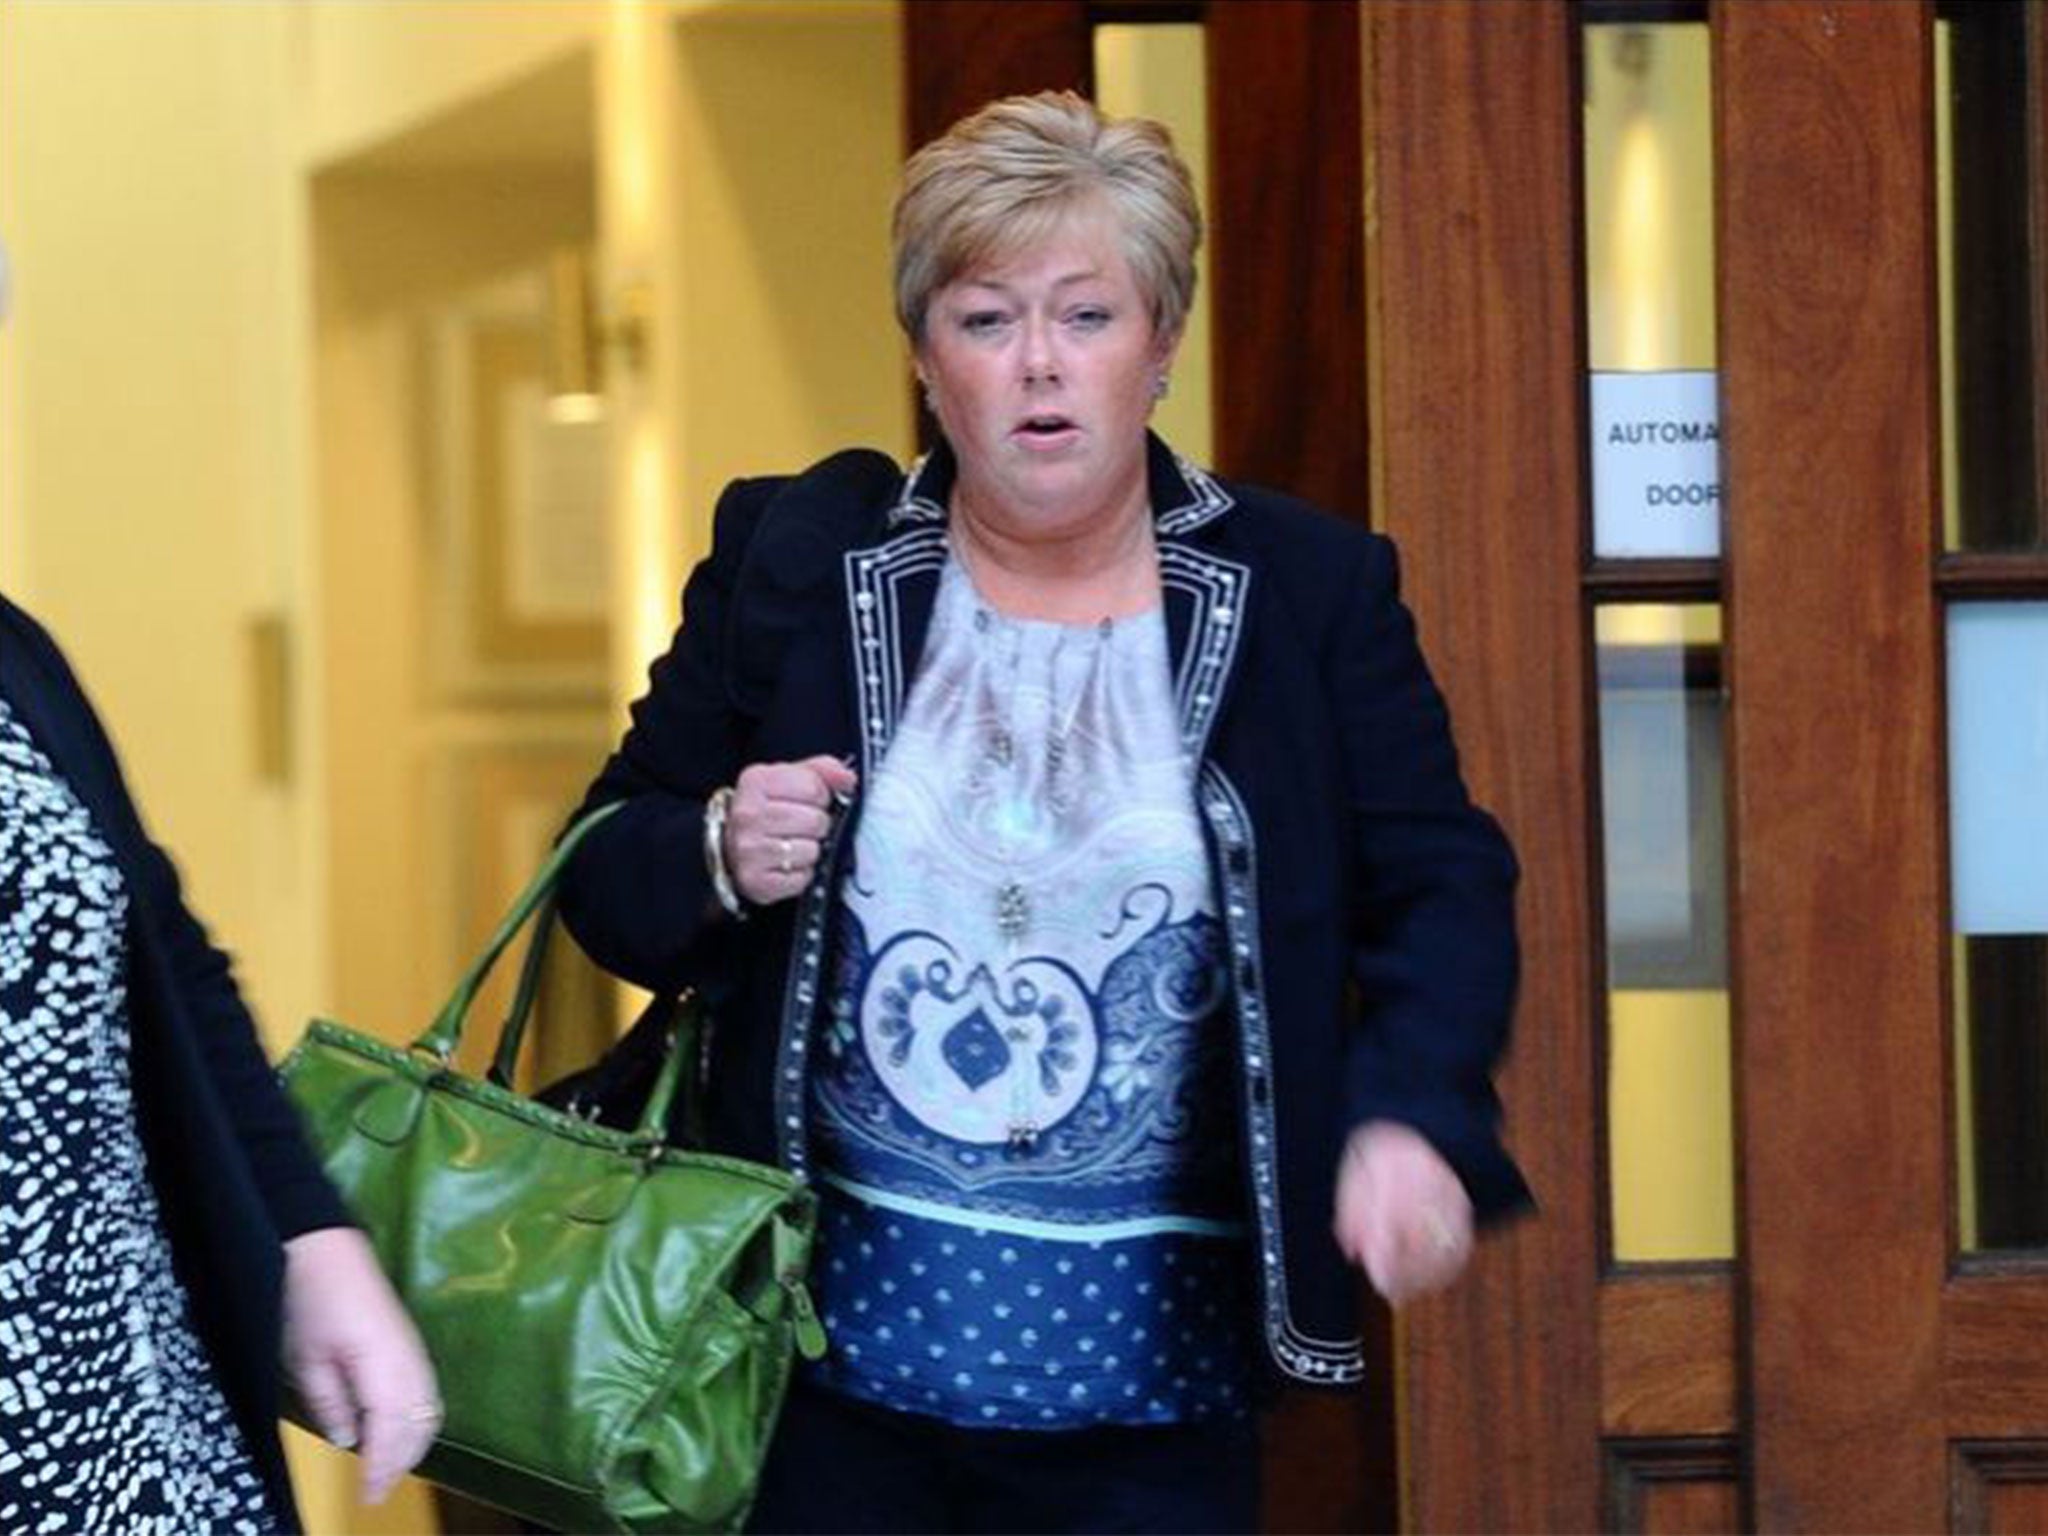 Helen Hopkins, 48, has been struck off from her job as head of Ysgol Bro Sion Cwilt school